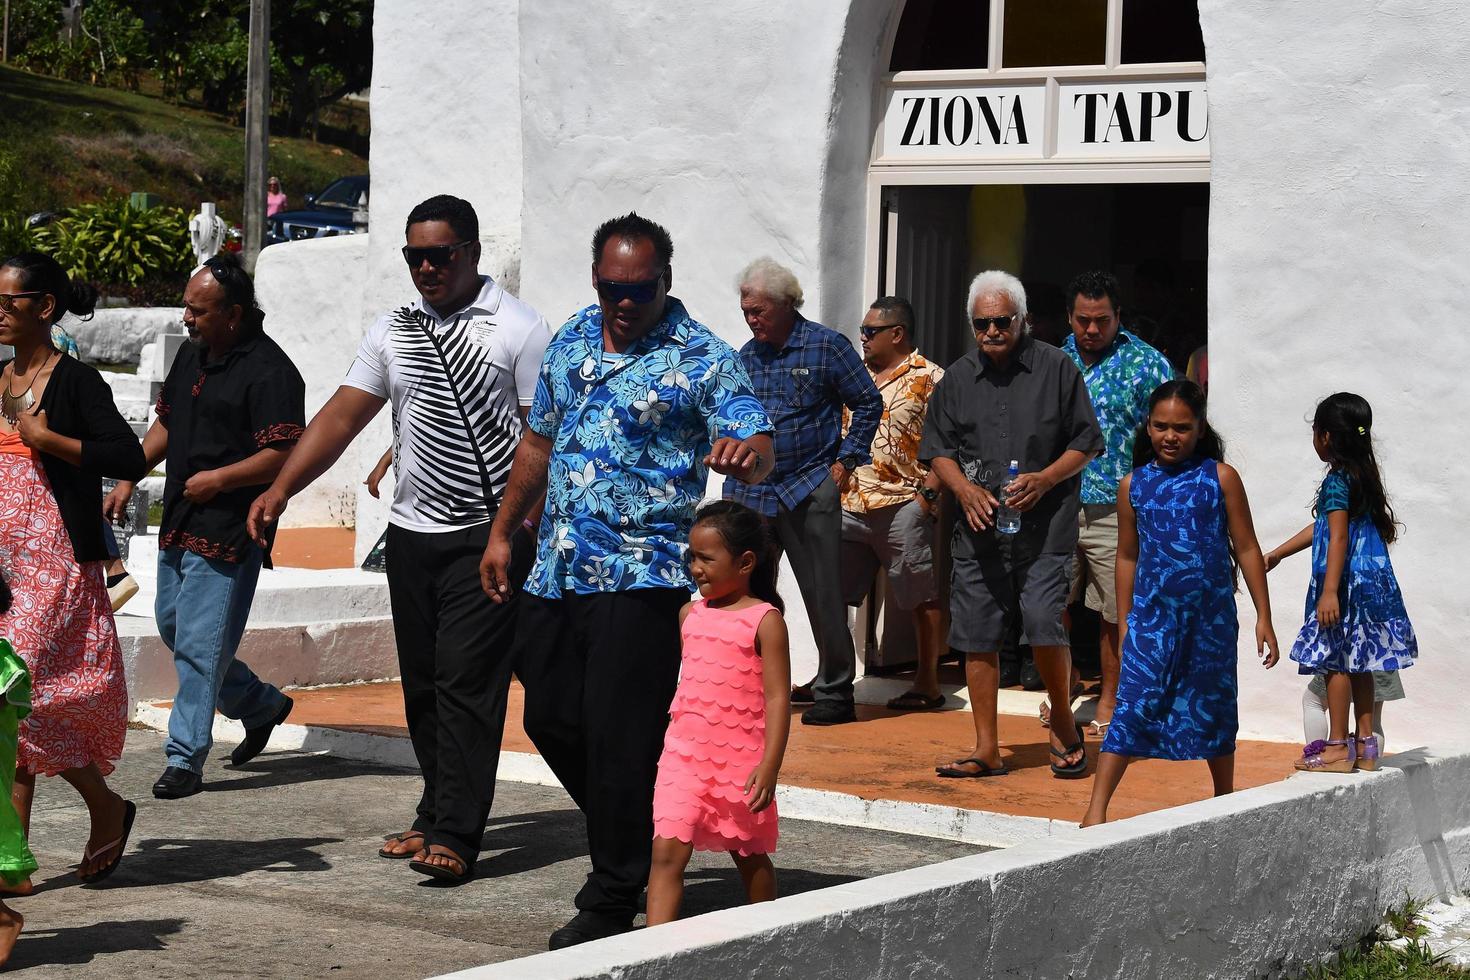 aitutaki, île cook - 27 août 2017 - population locale à la messe photo